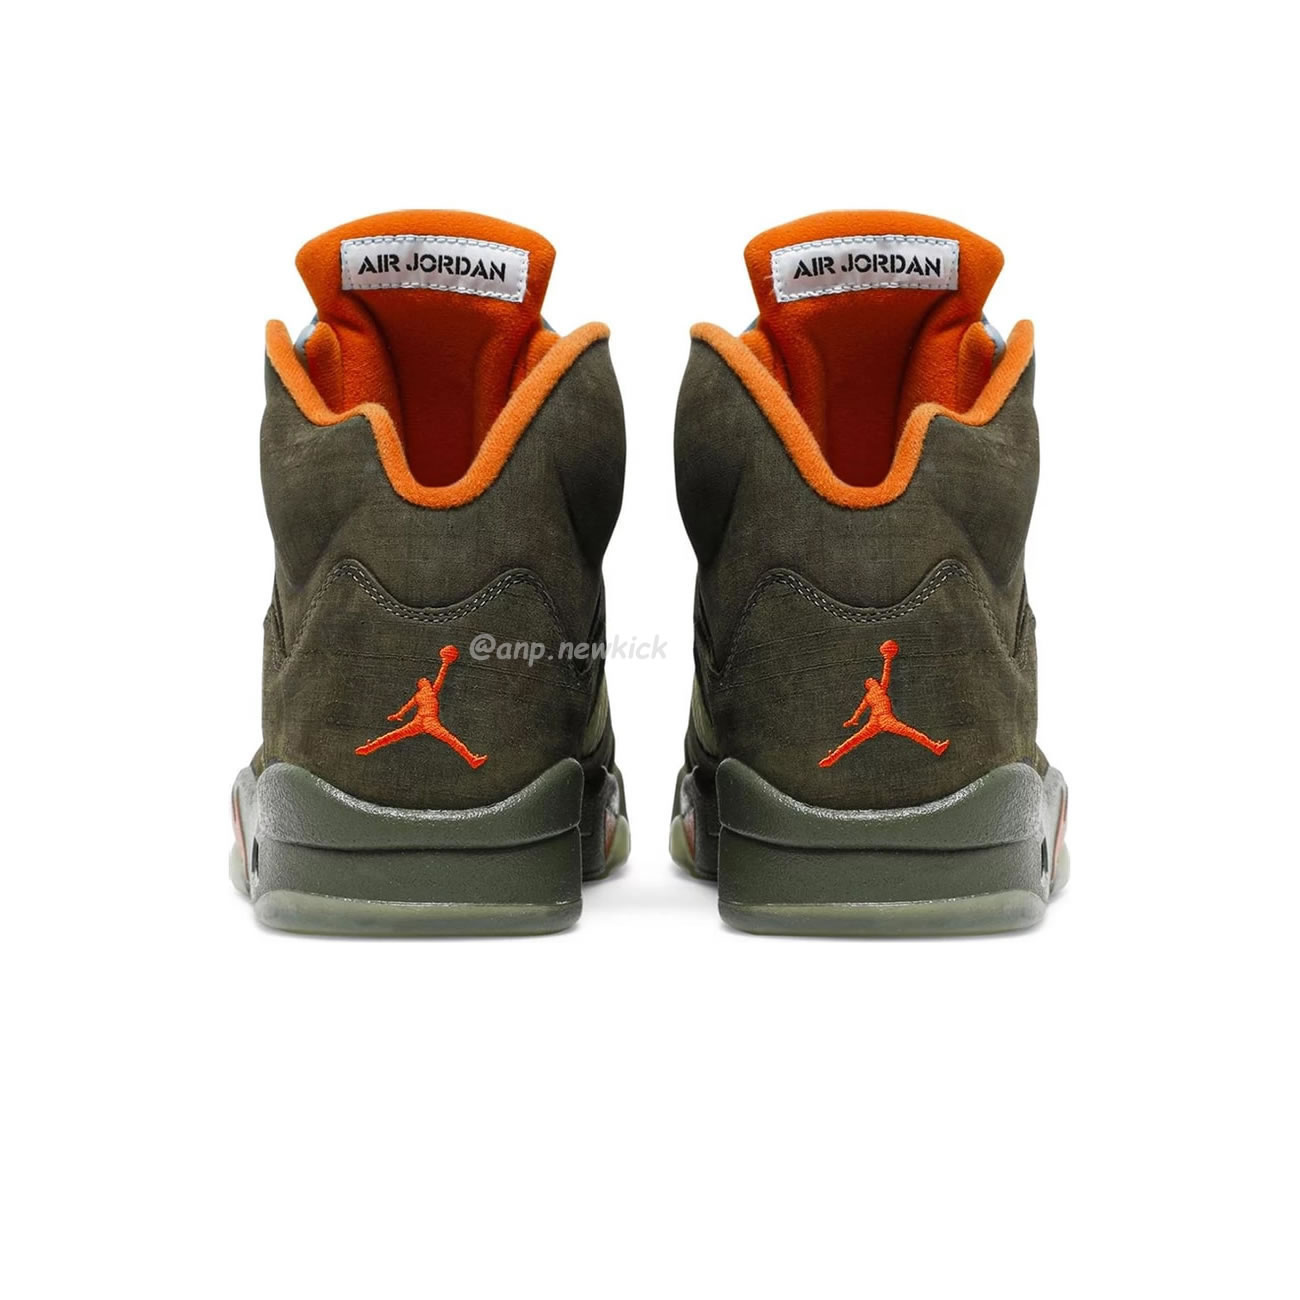 Air Jordan 5 Retro “Olive” DD0587-308